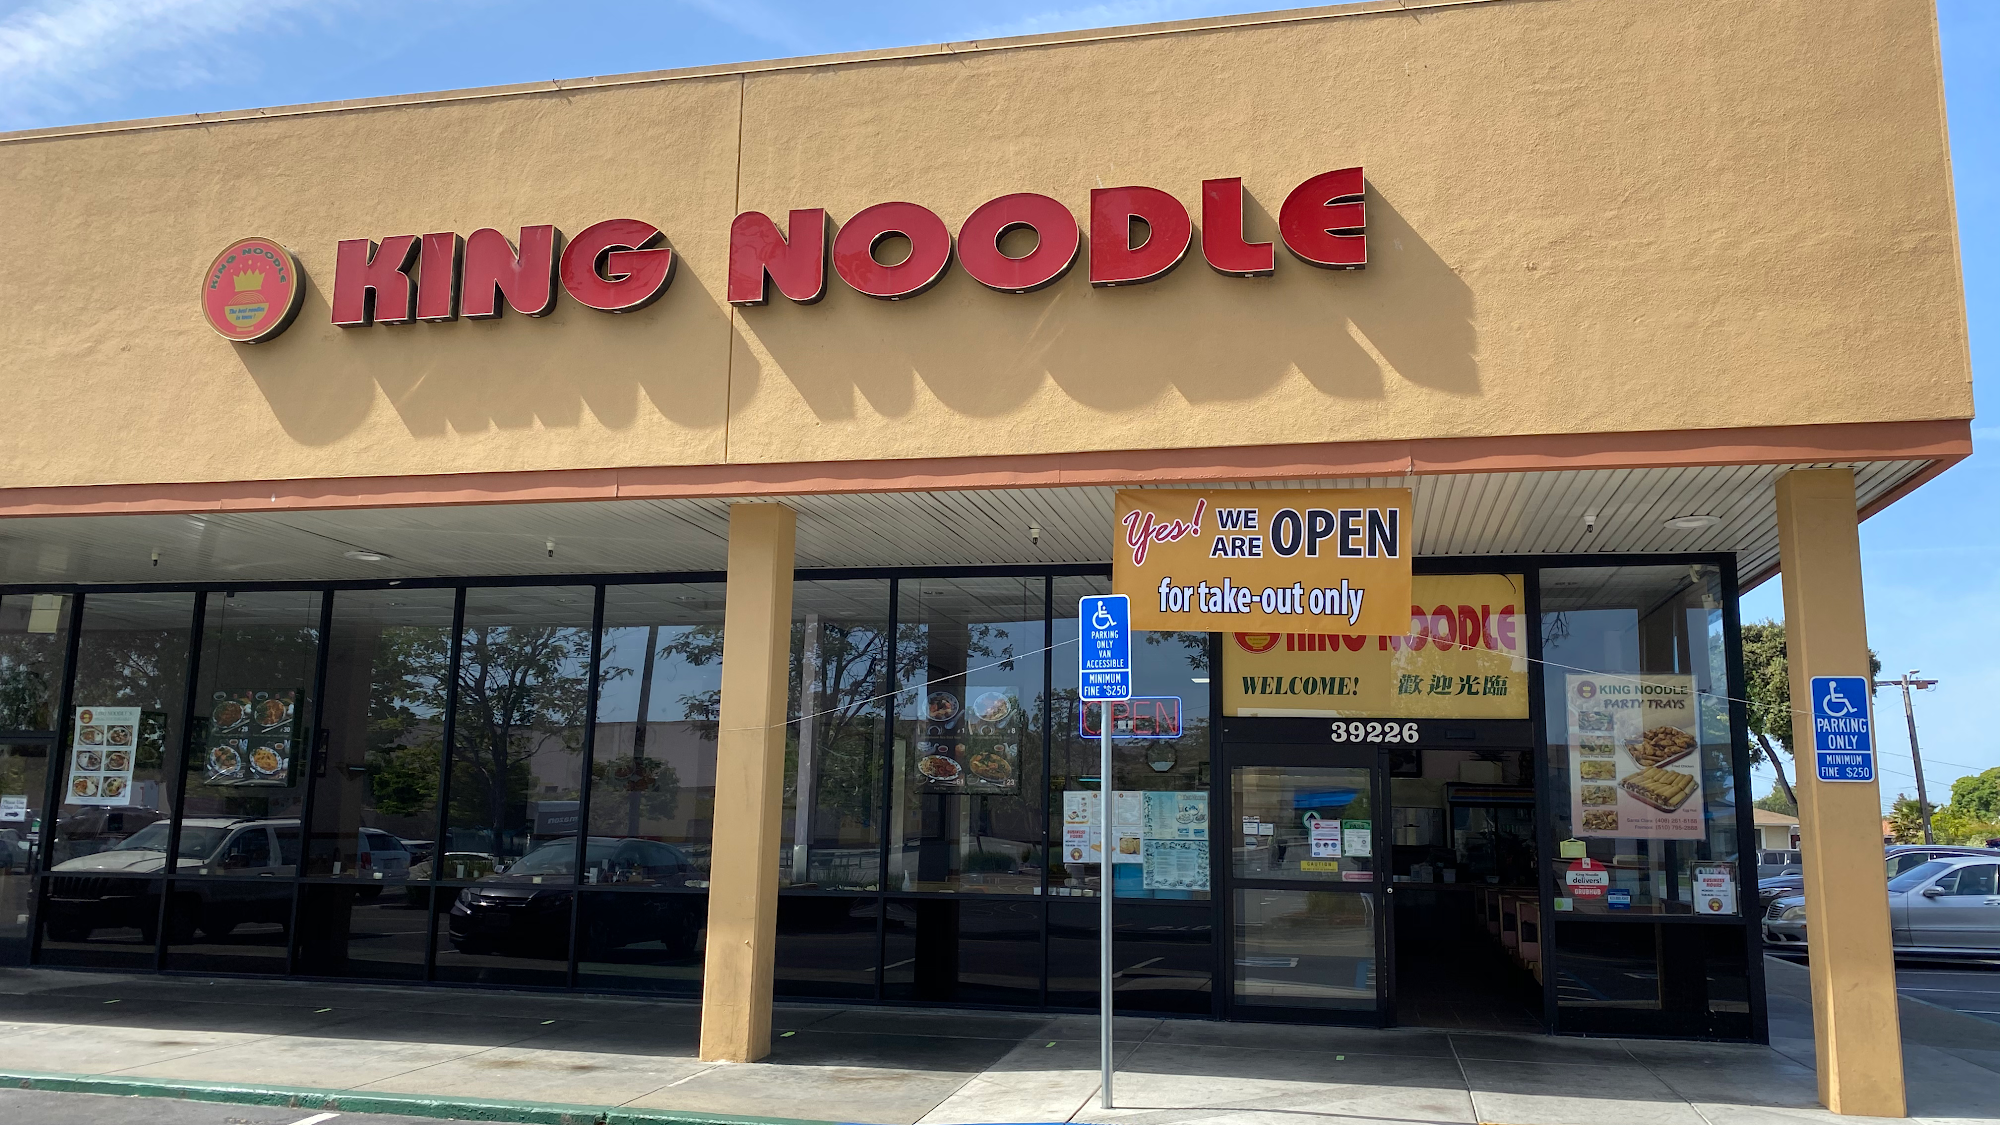 King Noodle